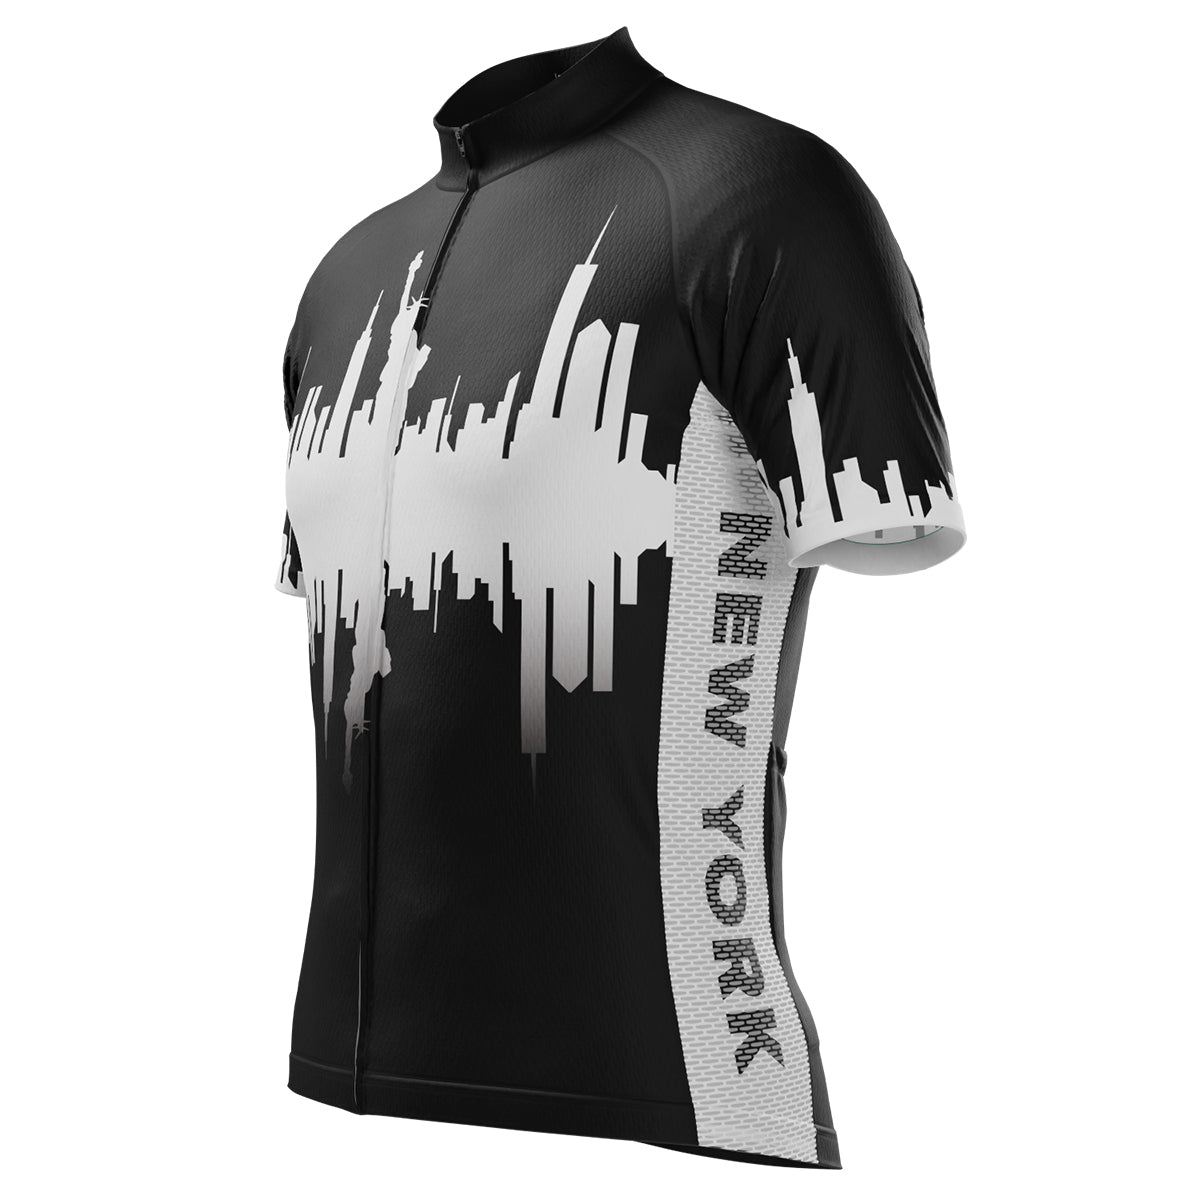 Men's Bronx New York City Short Sleeve Cycling Jersey